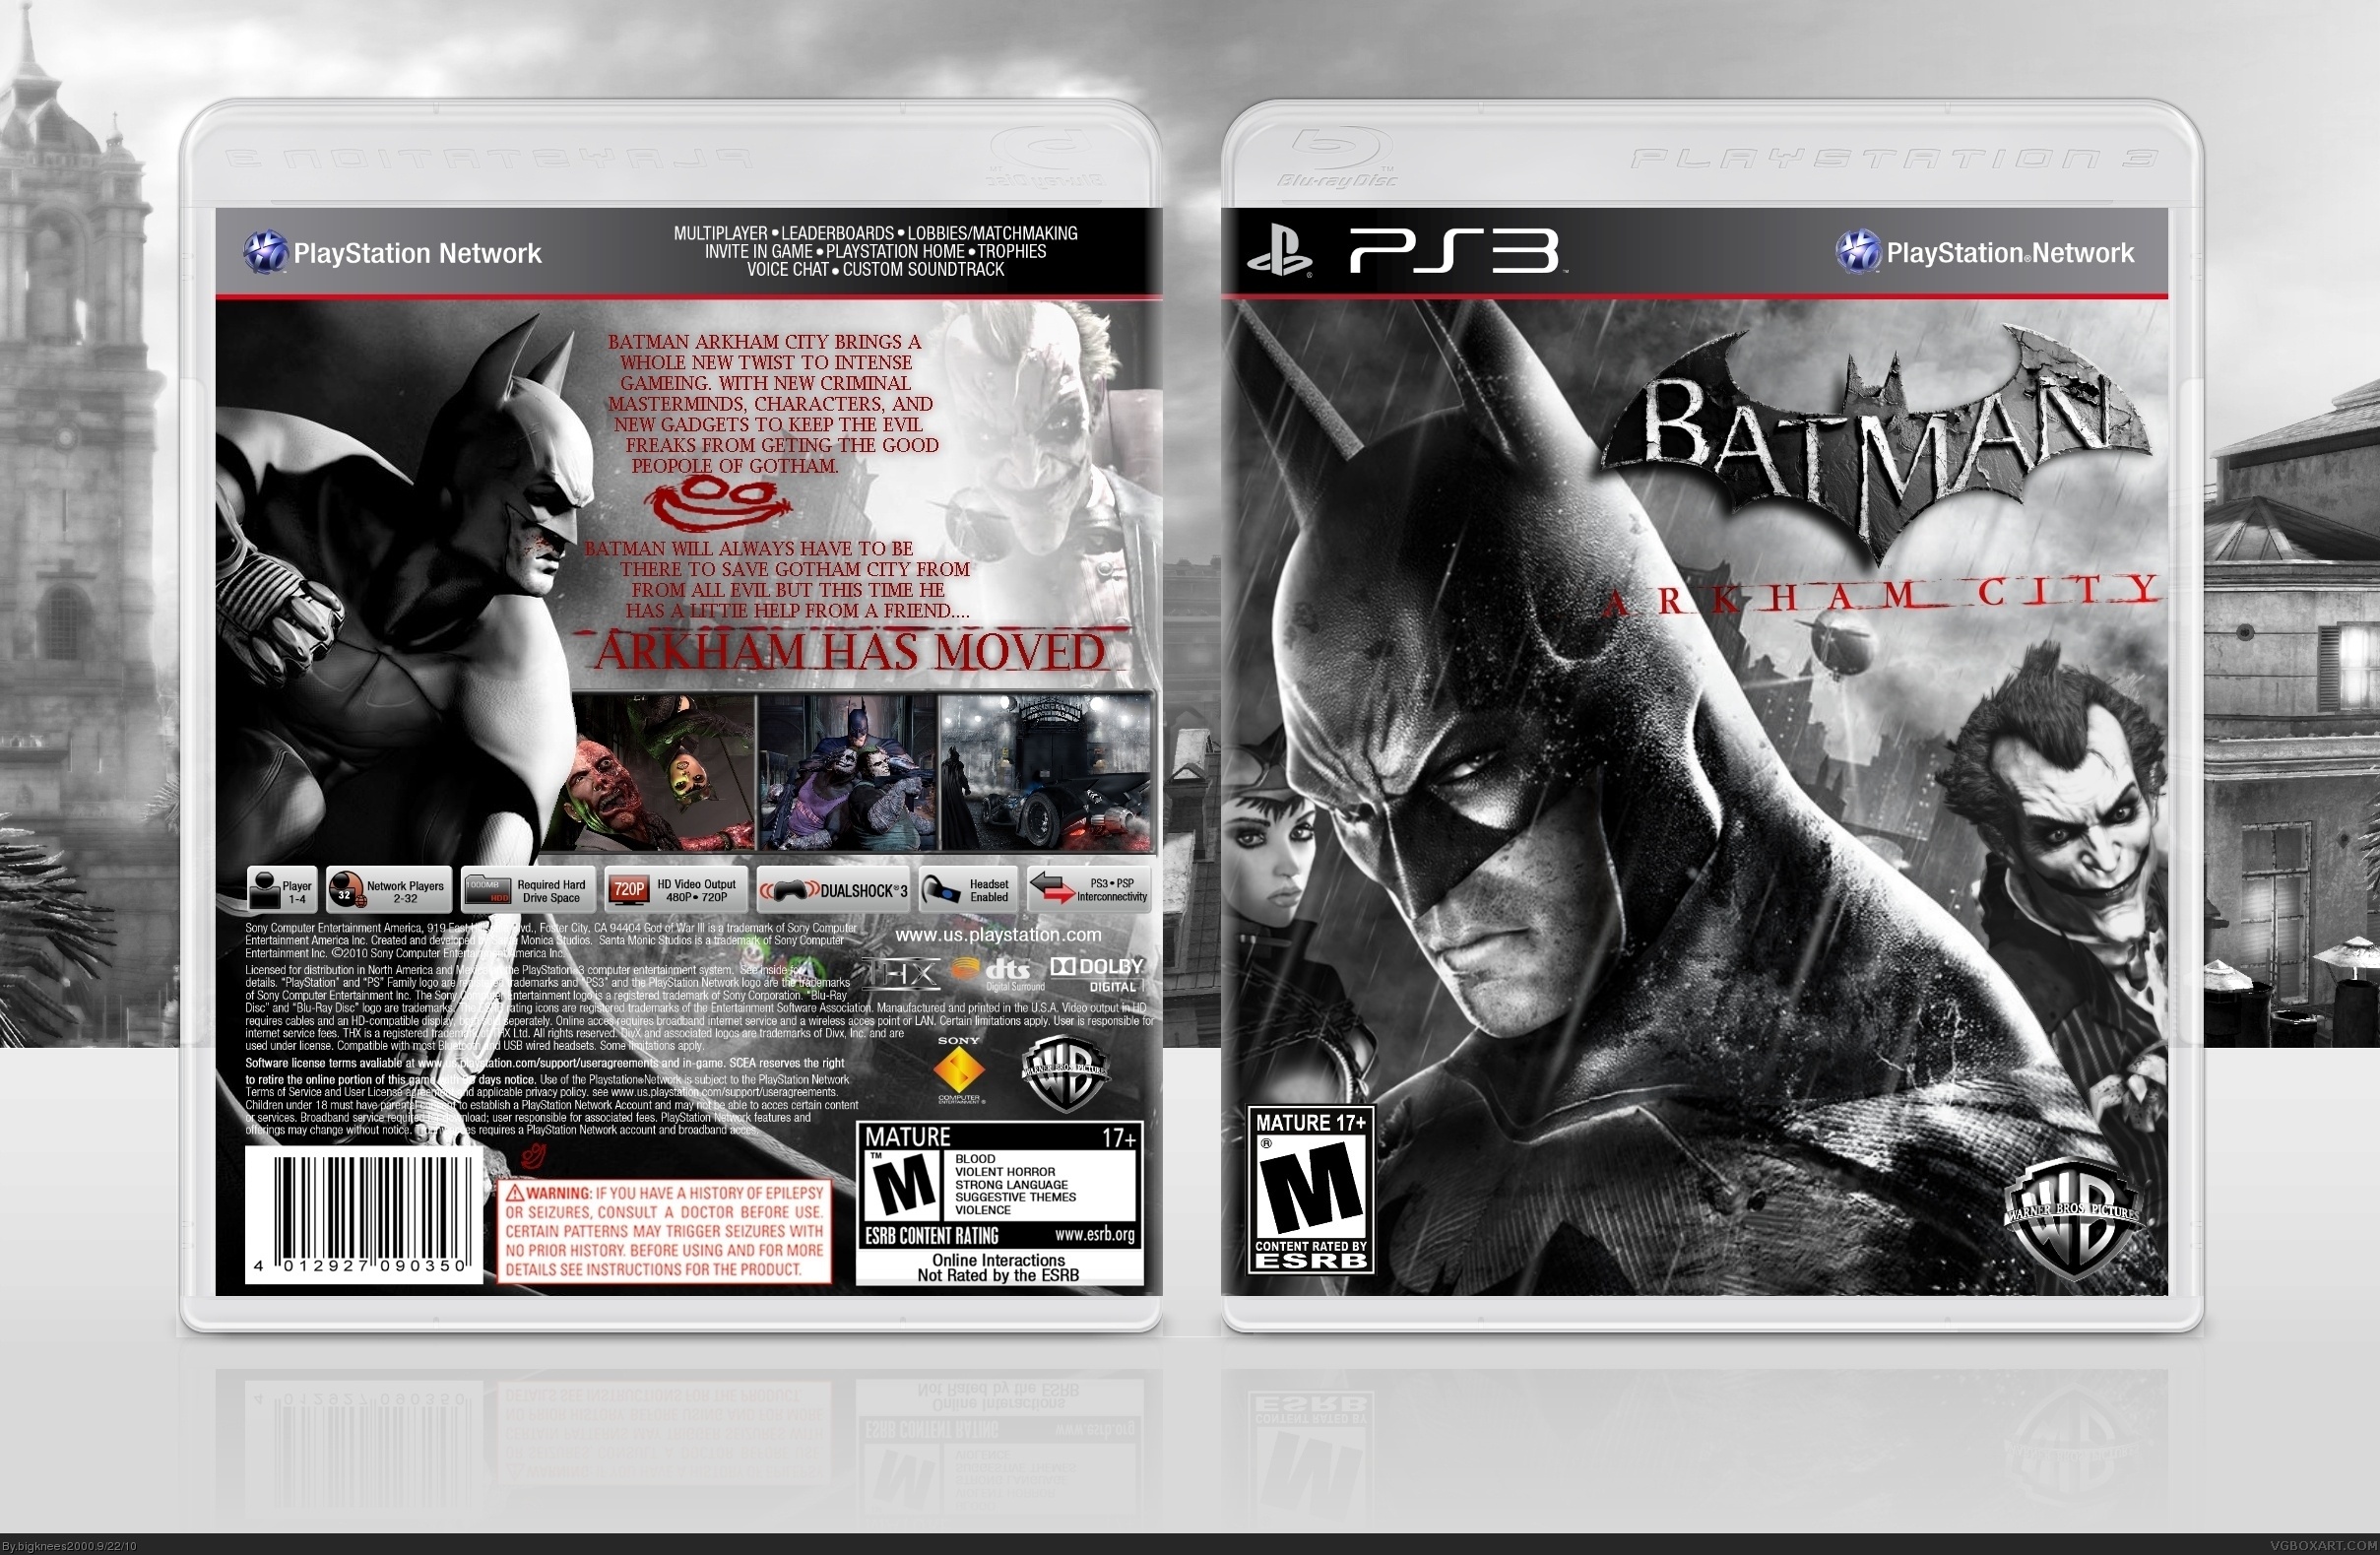 Viewing full size Batman:Arkham City PS3 box cover.